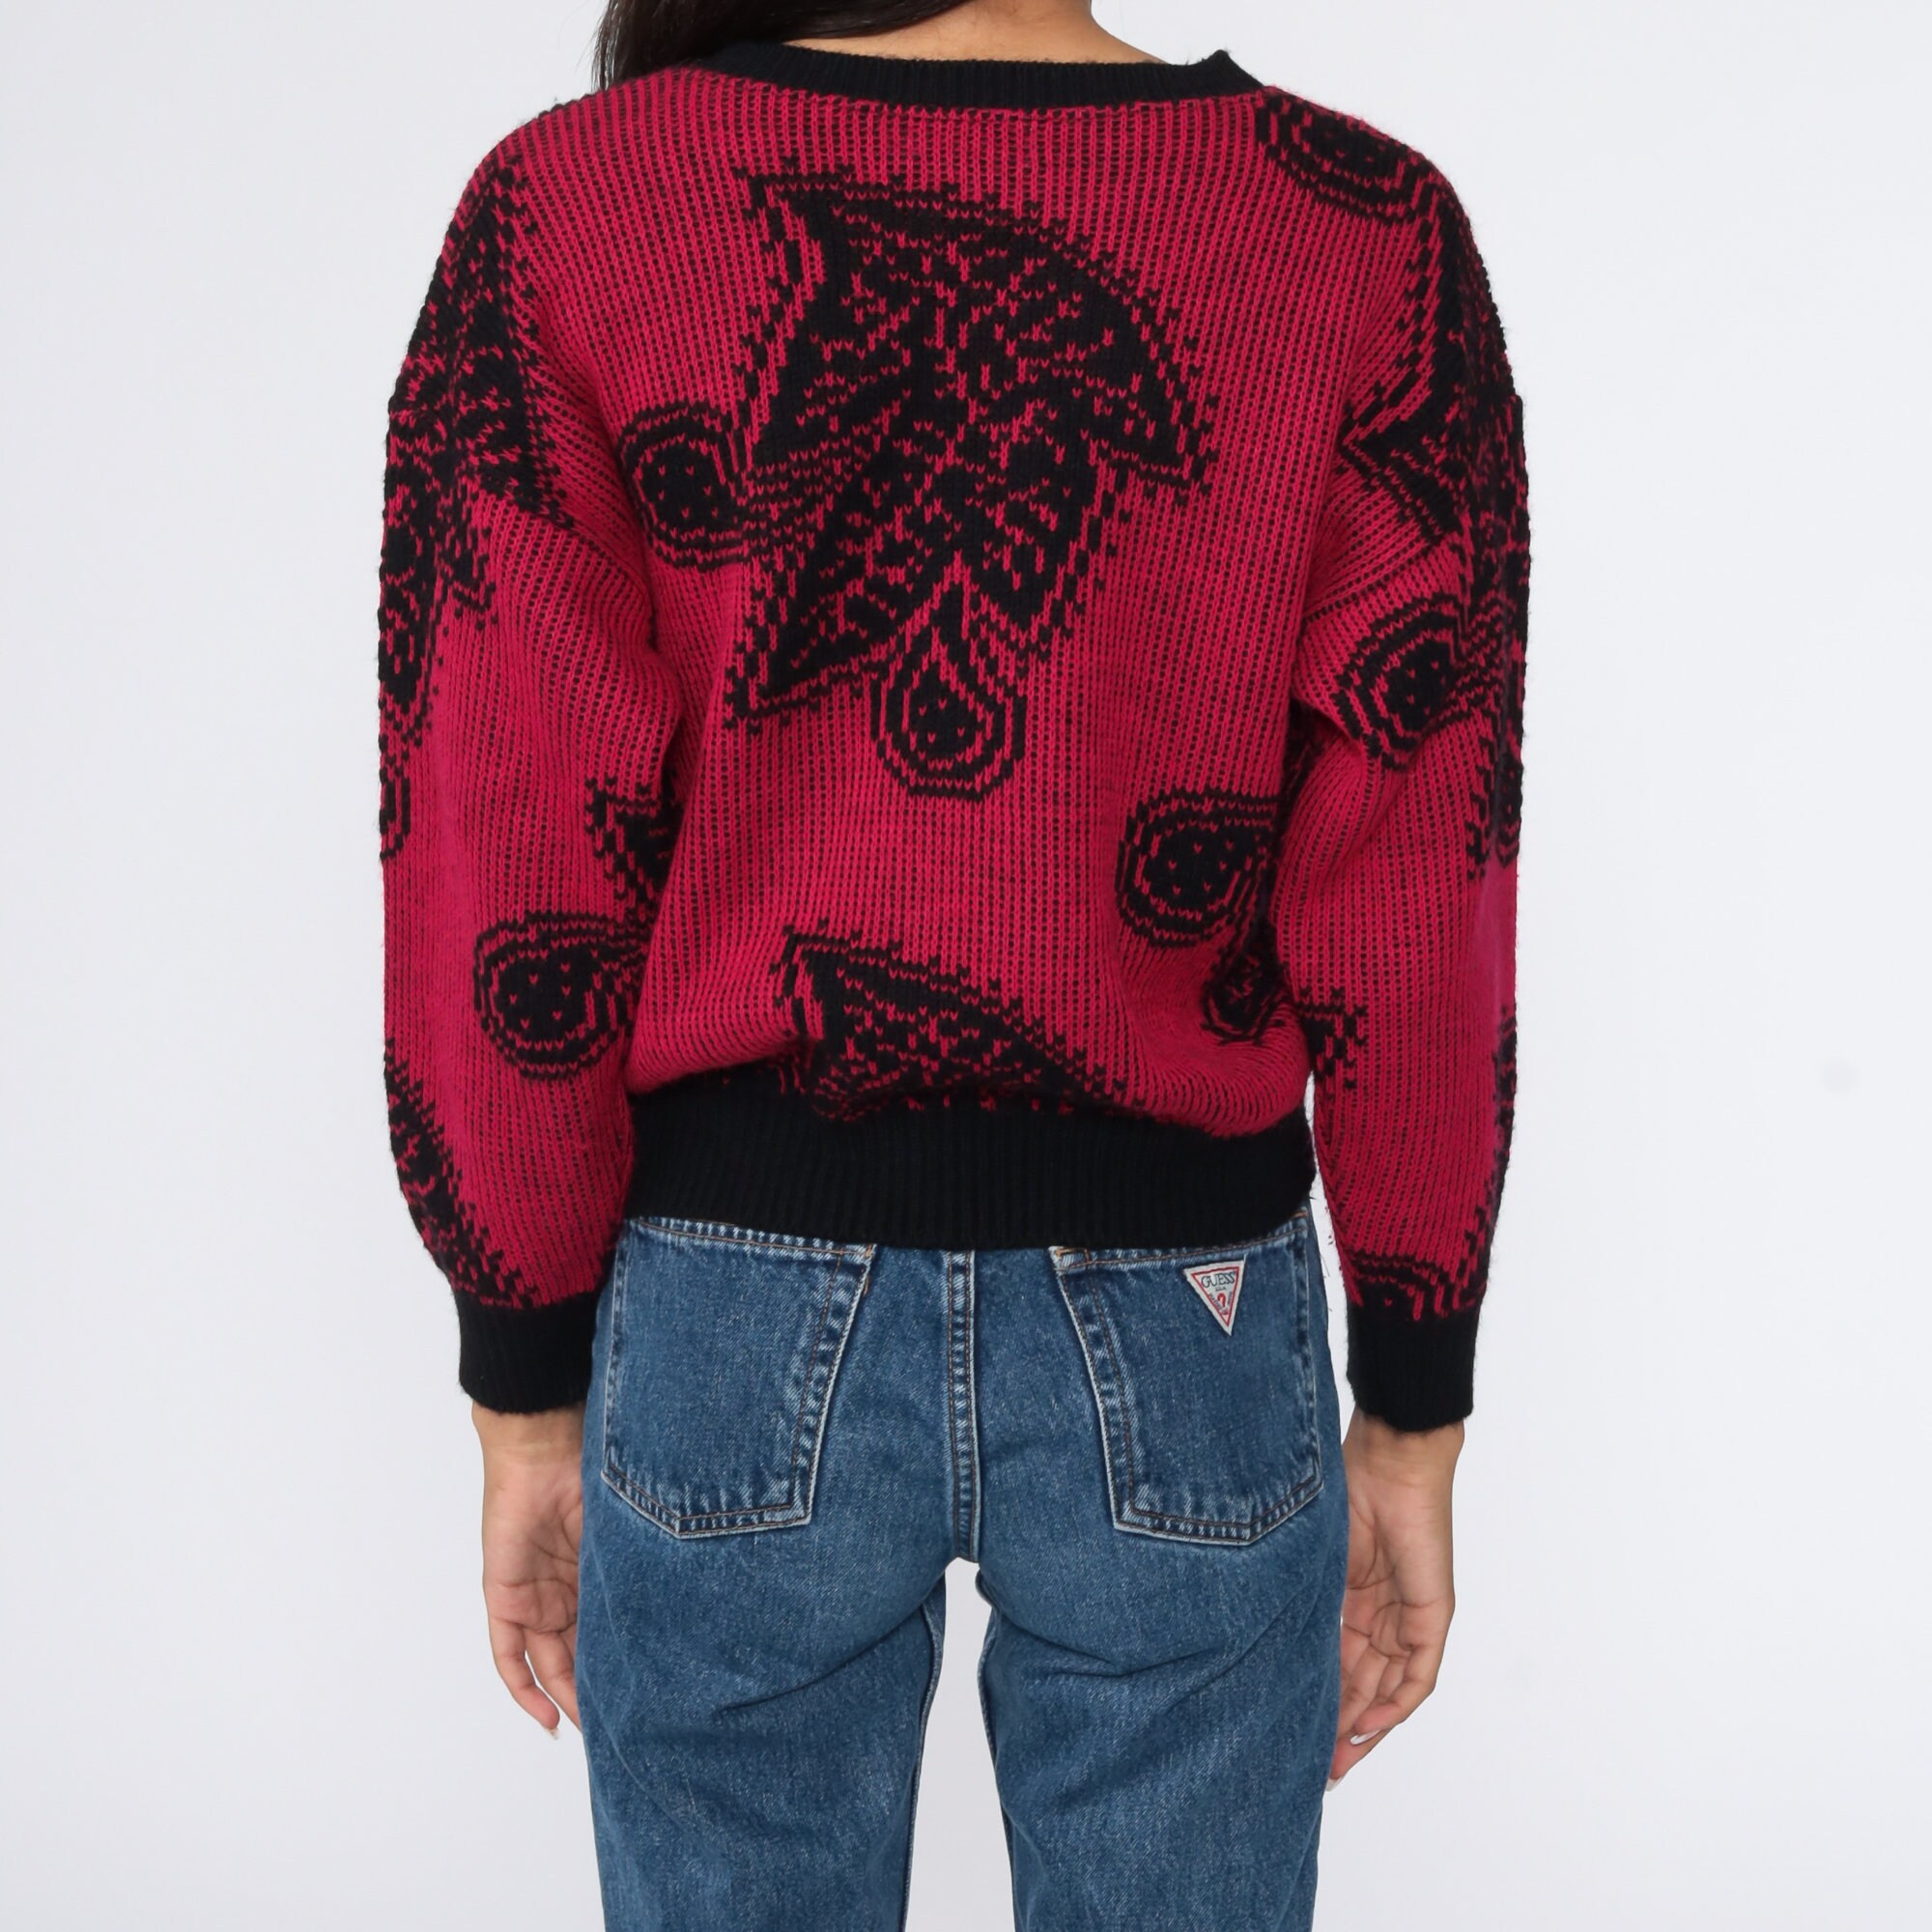 Paisley Sweater 80s Pink Black Knit Sweater Bohemian Graphic Print ...